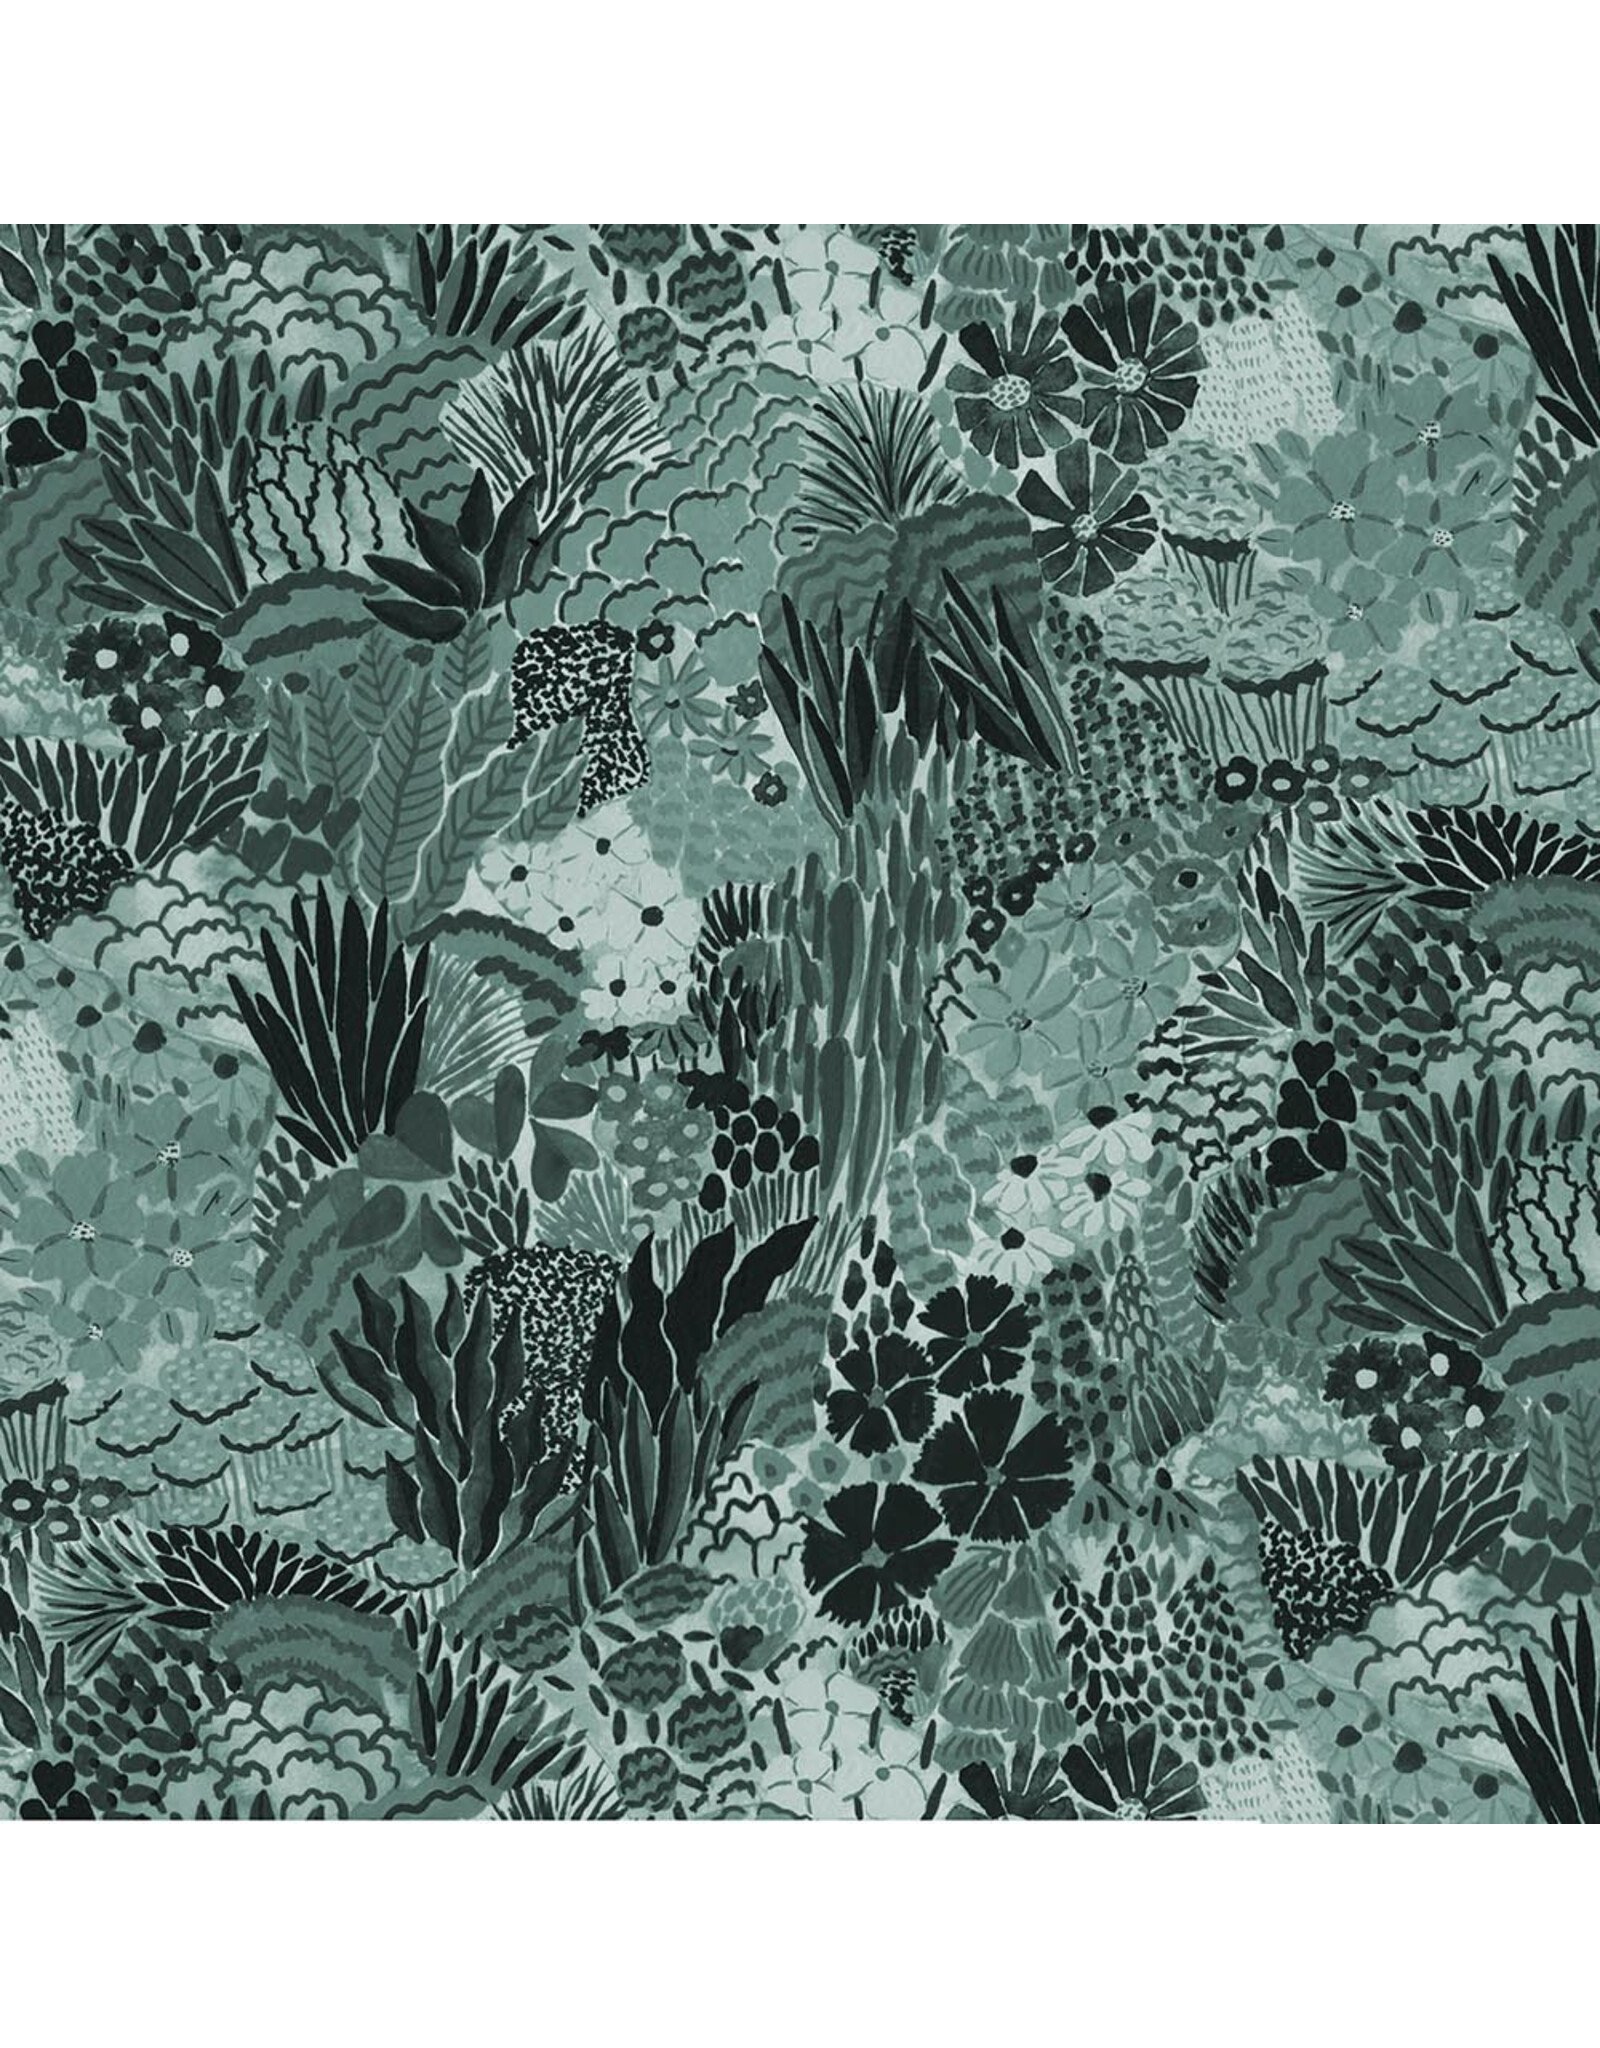 Figo Green World, Garden in Teal, Fabric Half-Yards